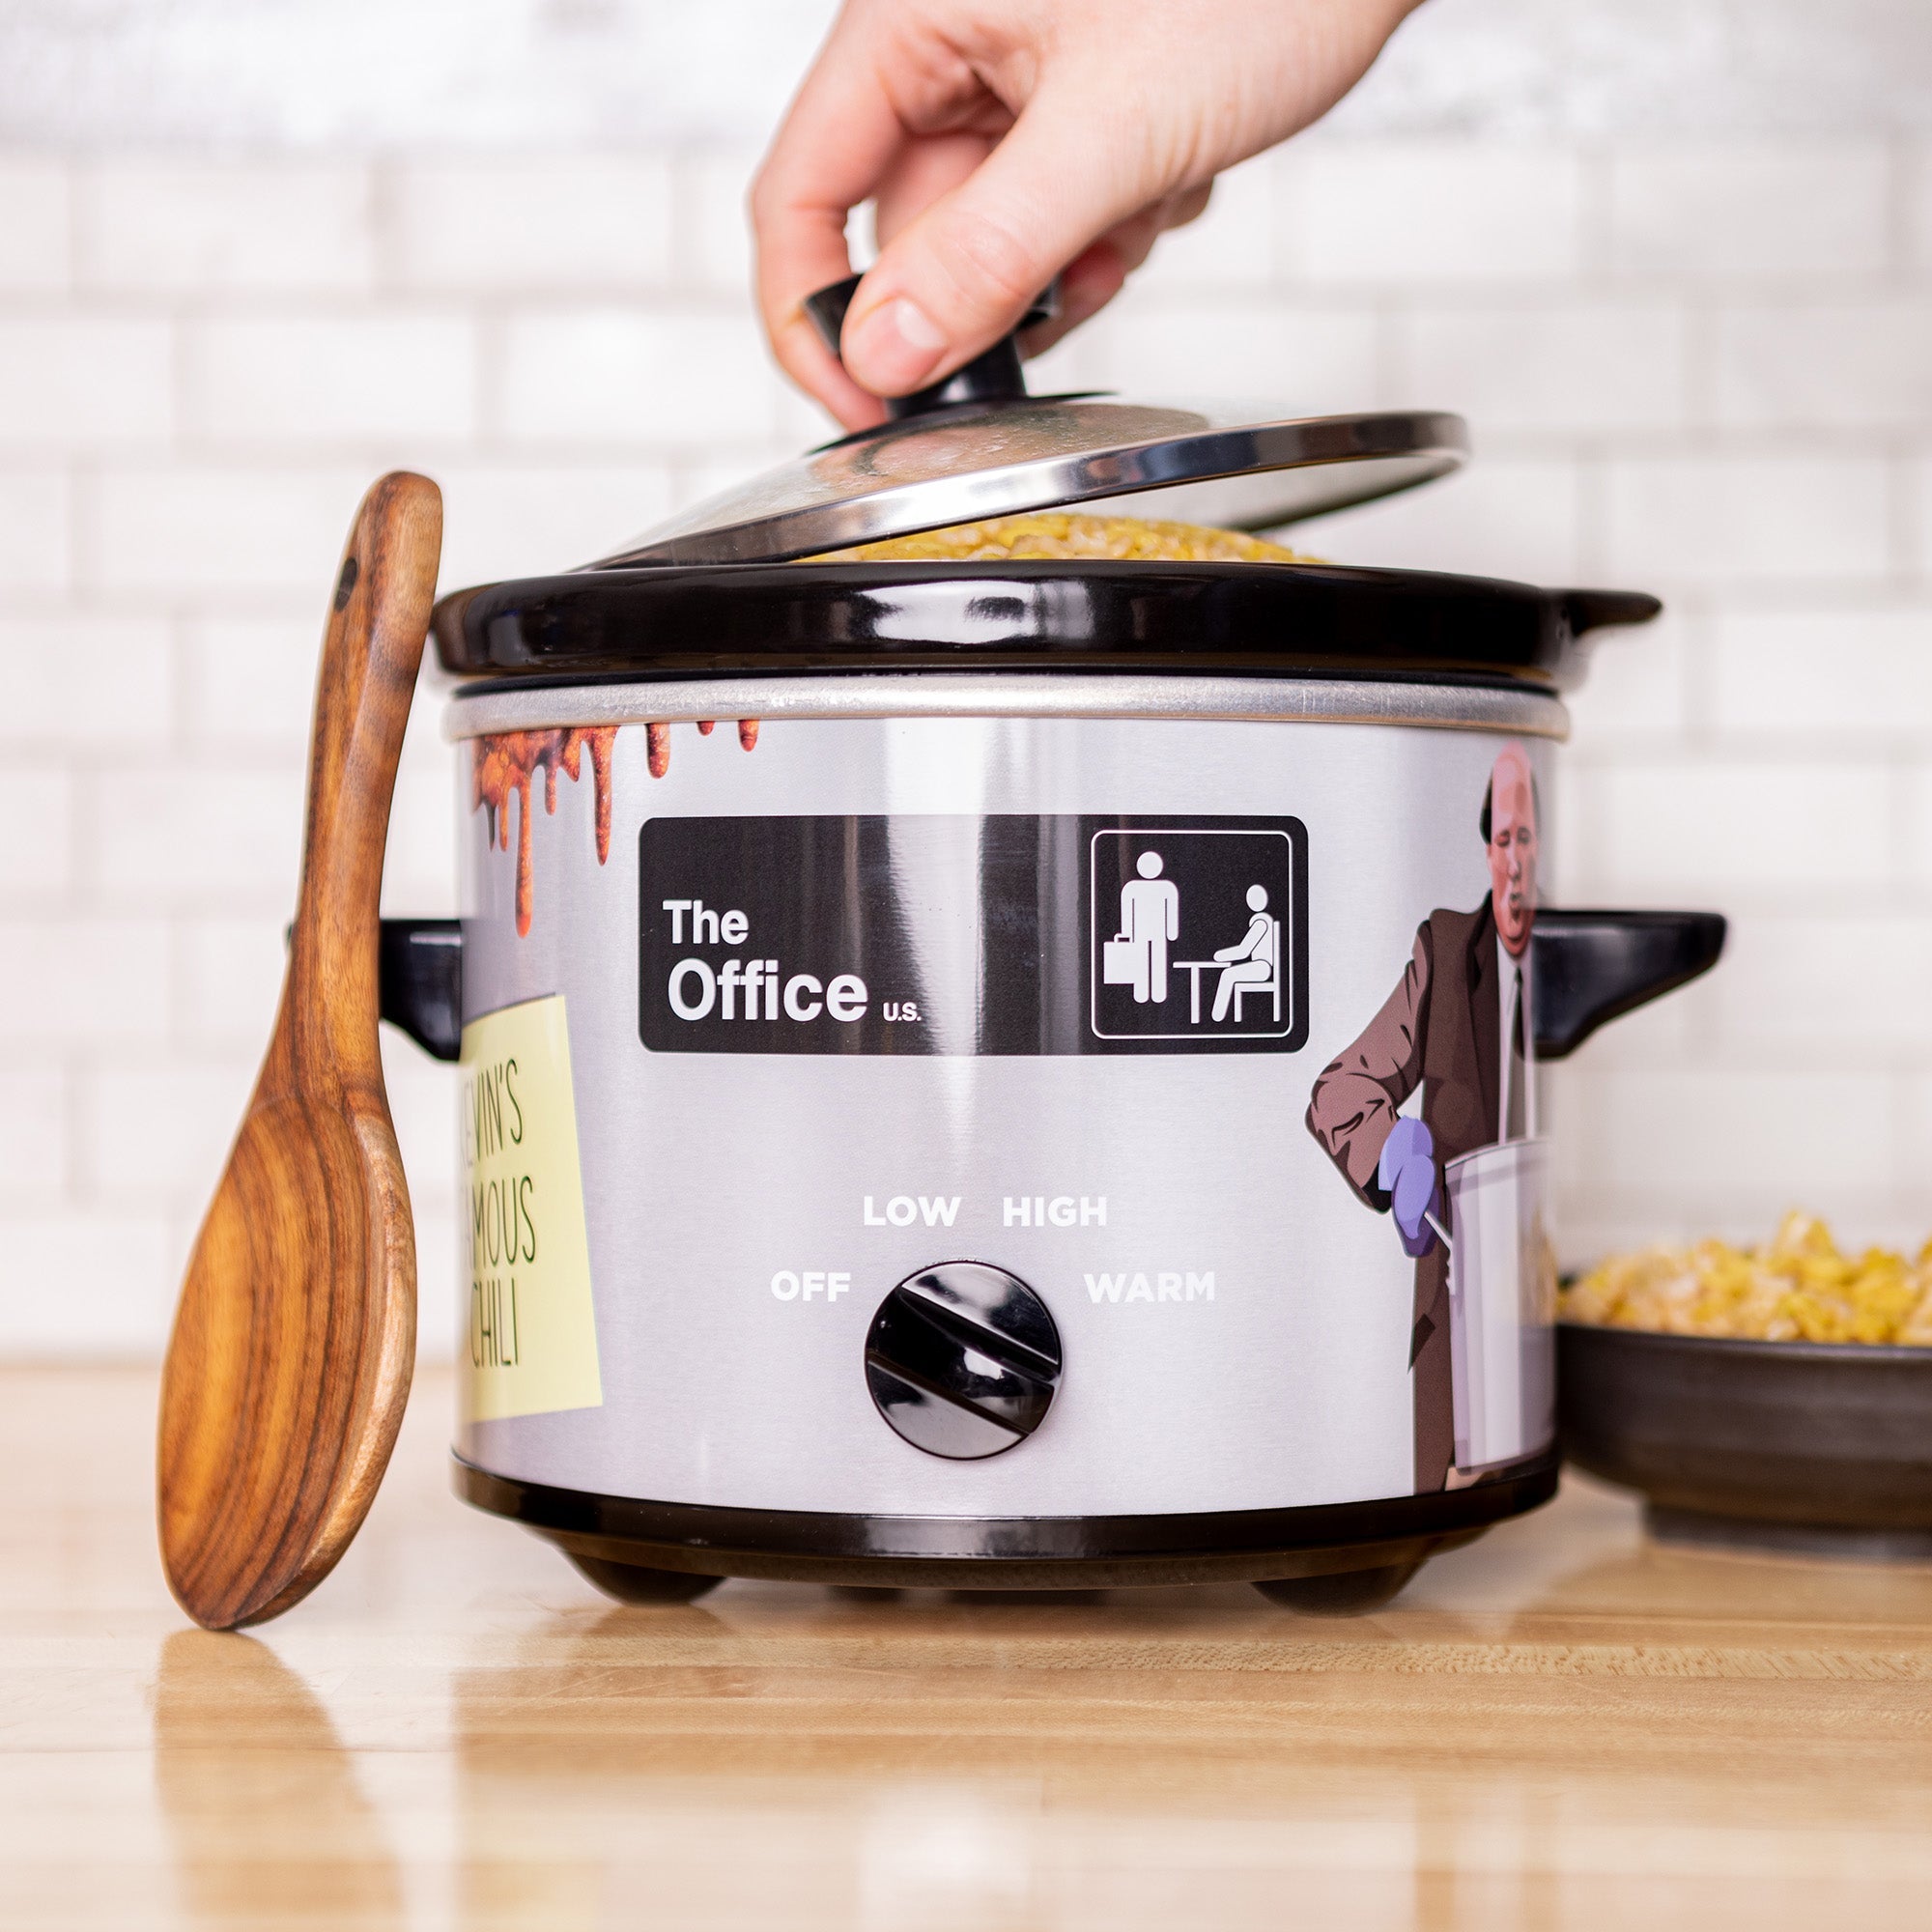 Uncanny Brands Star Wars 2-Quart Slow Cooker- Kitchen Appliance